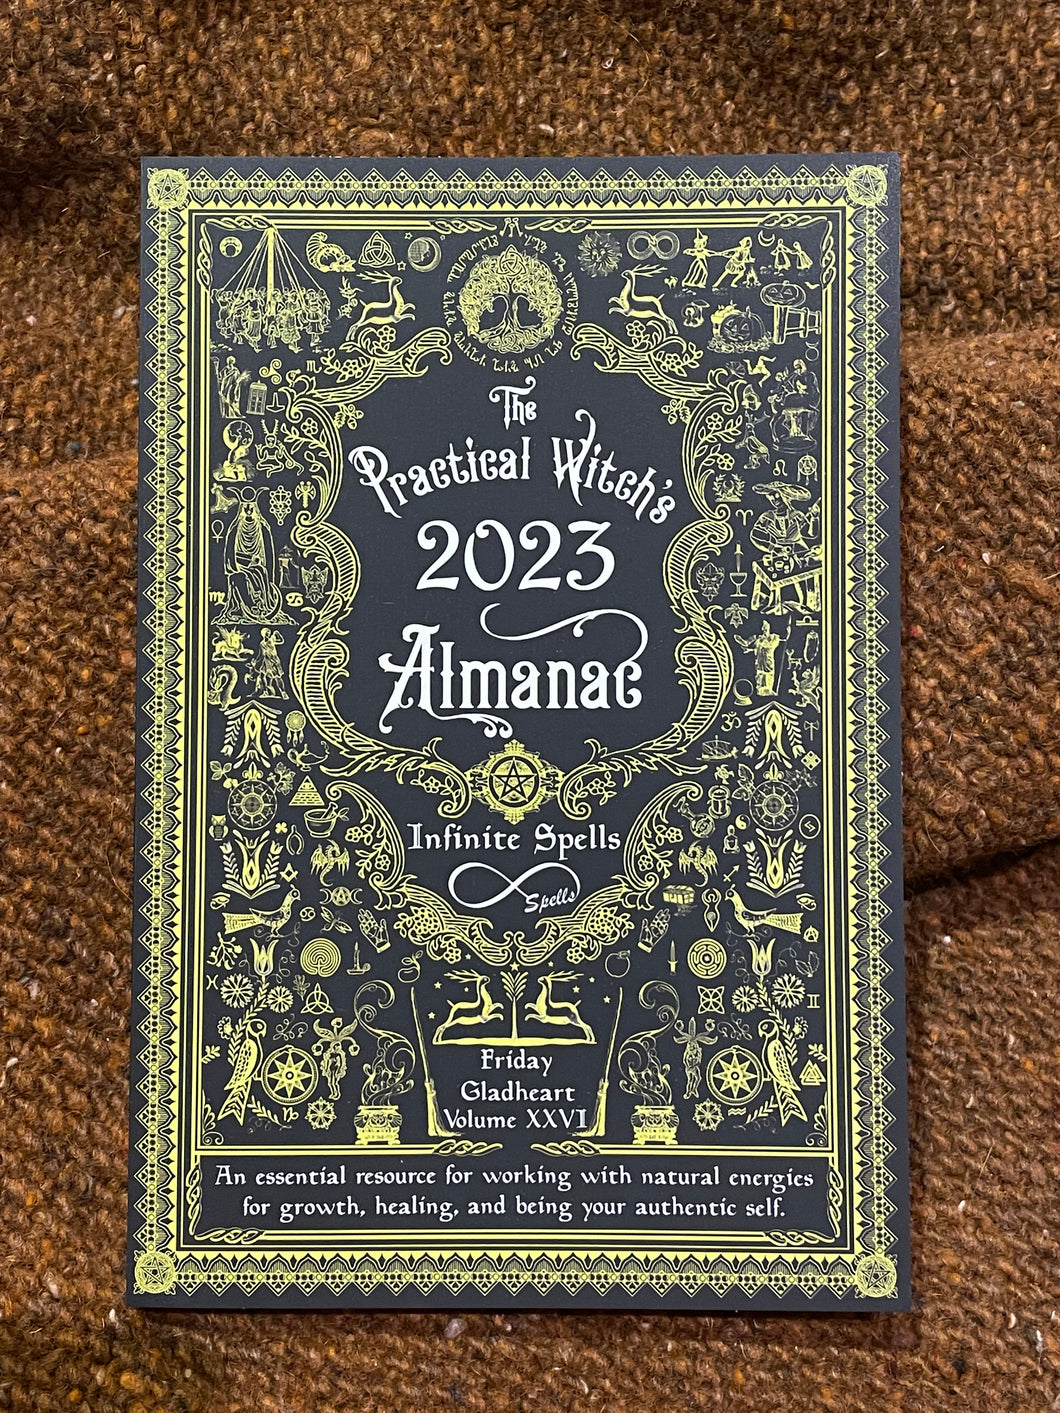 Practical Witch's Almanac 2023: Infinite Spells